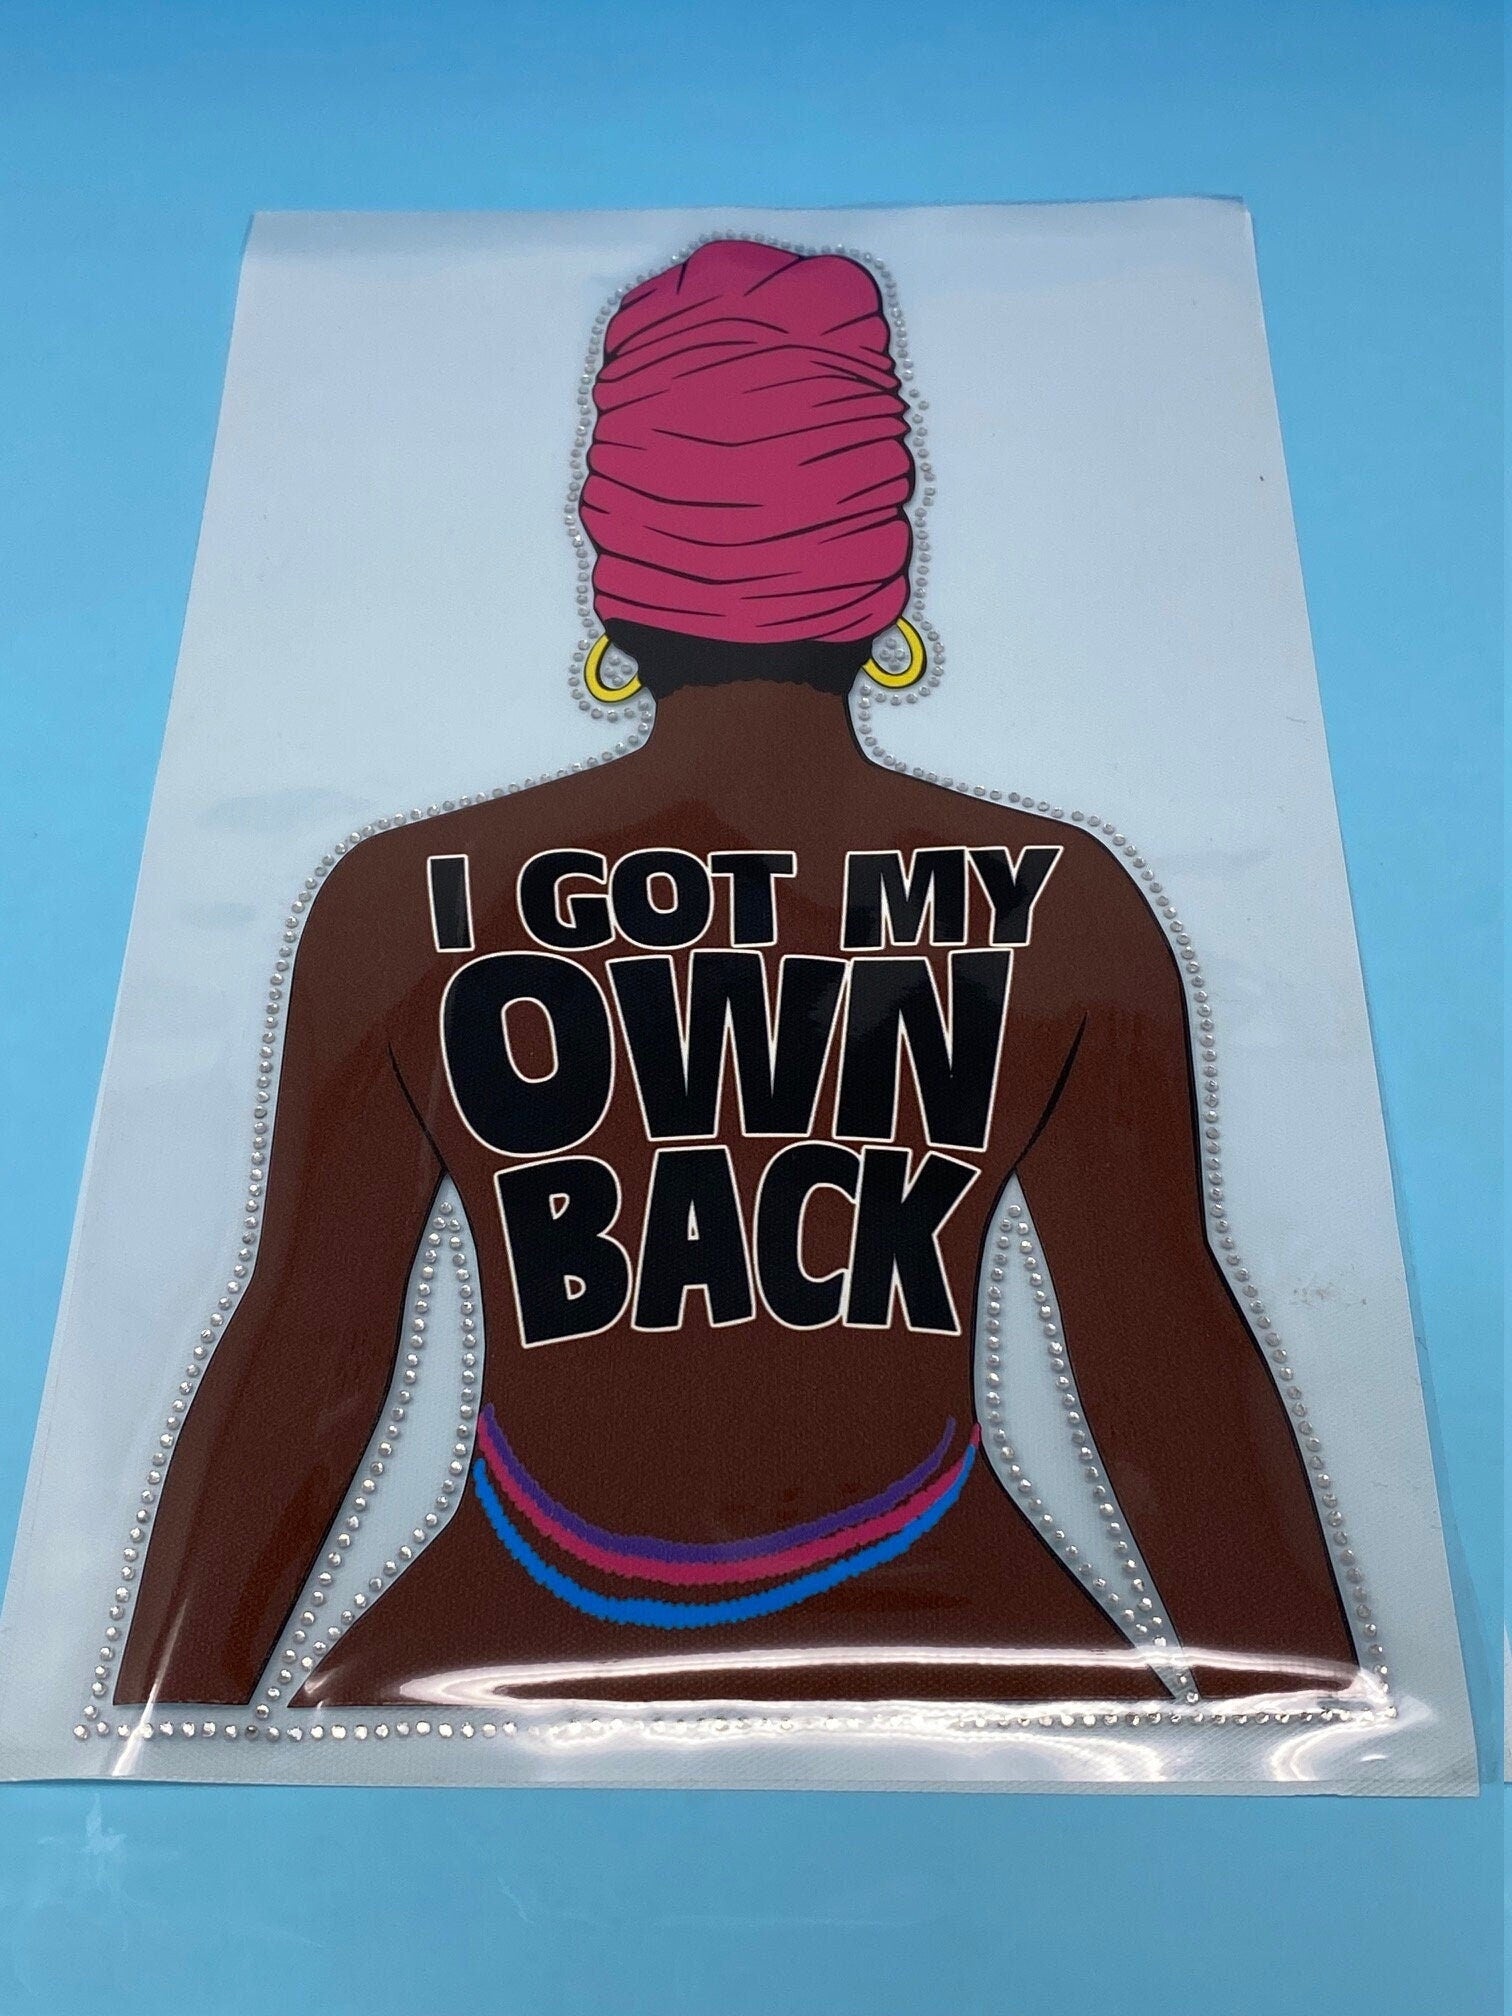 T-shirt Transfer Sheet, "I Got My Own Back!" PLUS Outlined bling crystal Sheet for Heat Pressing on garments, DTF Applique